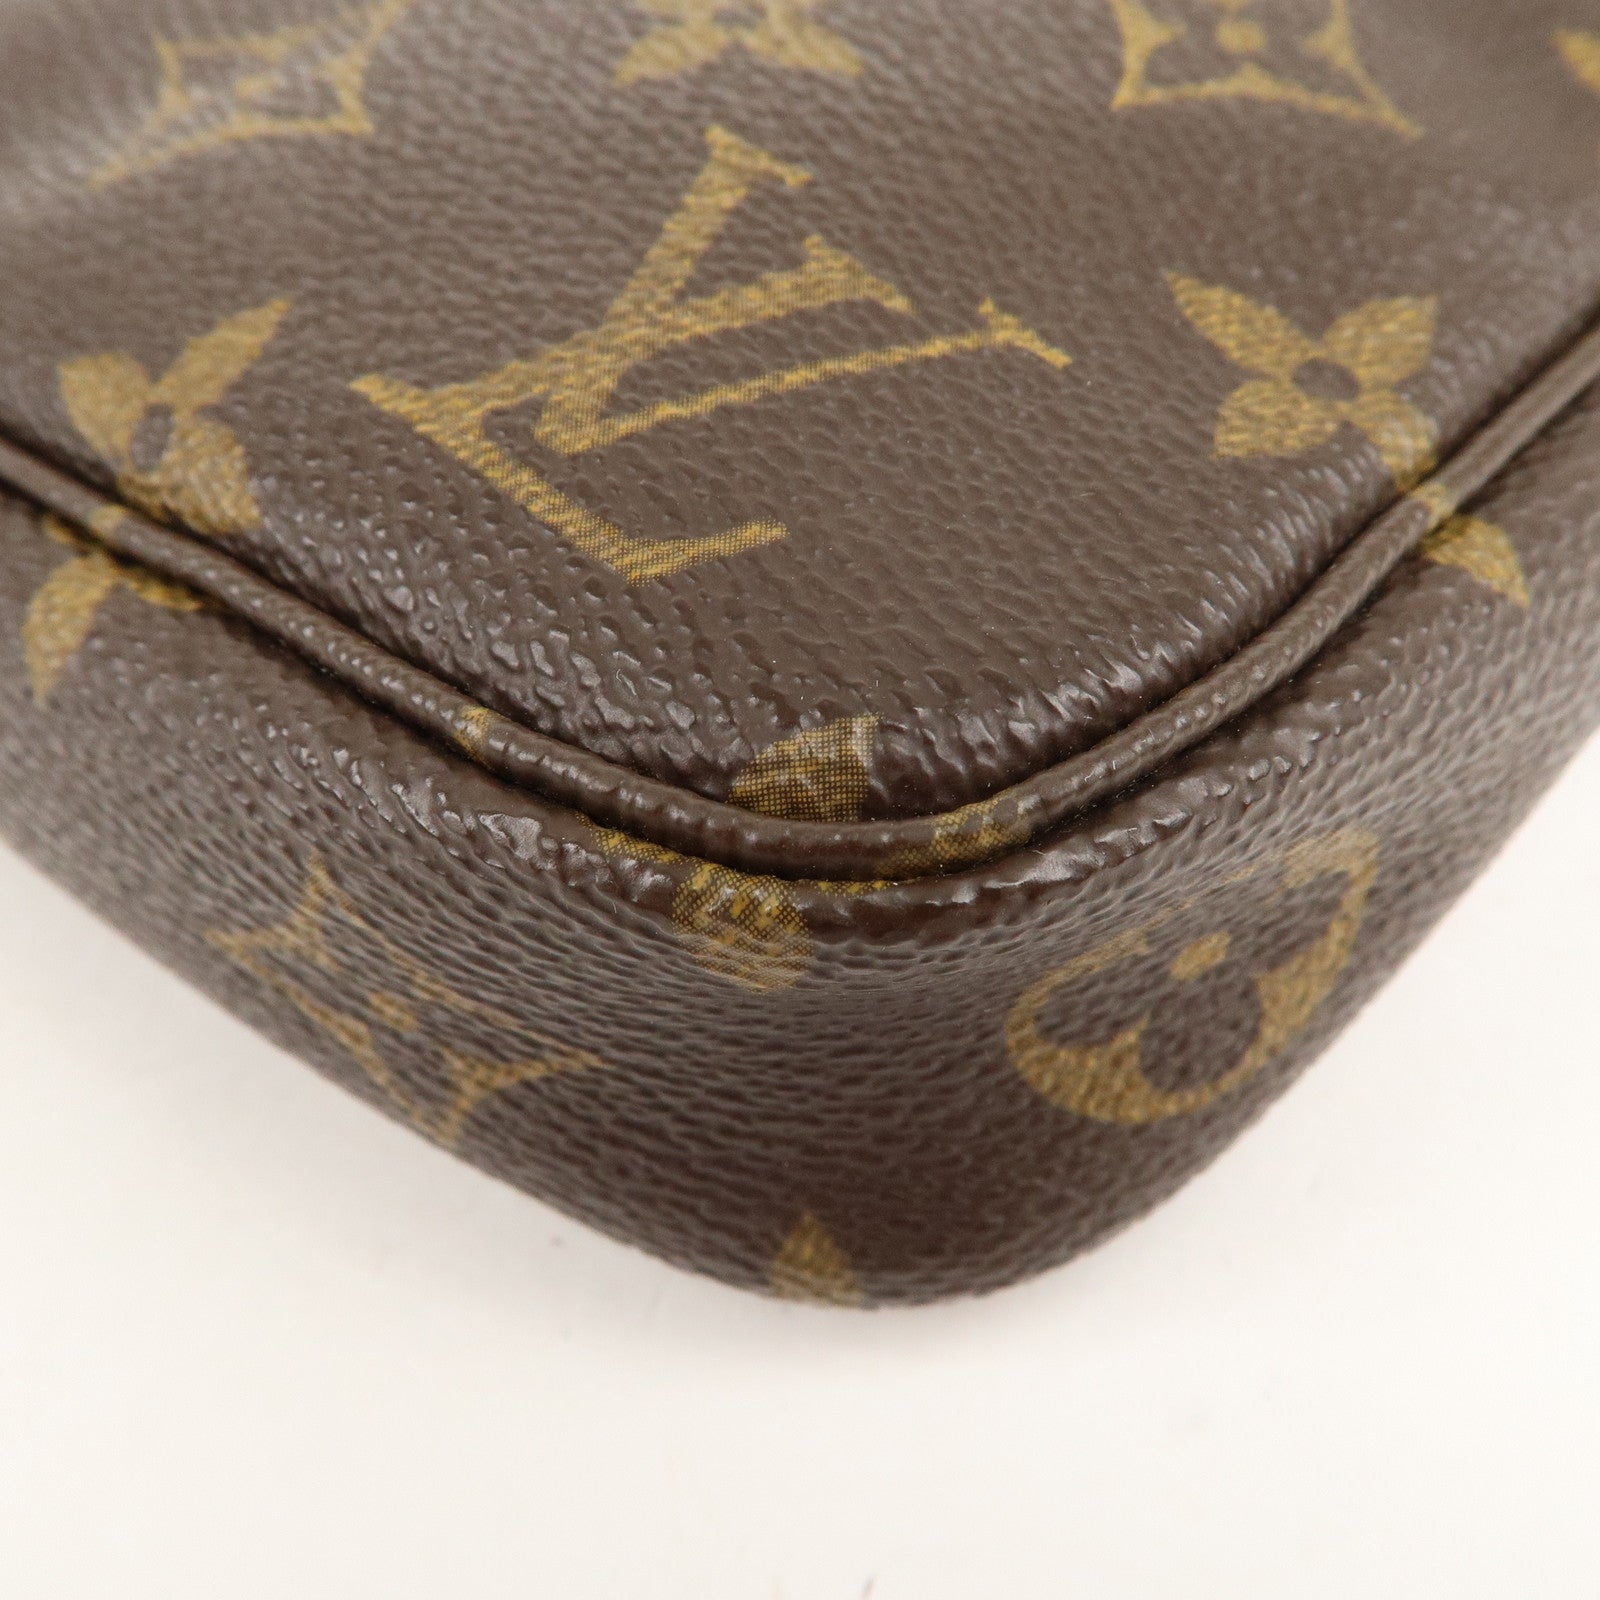 Louis Vuitton Pre-Loved Trousse Pochette bag for Women - Brown in Kuwait